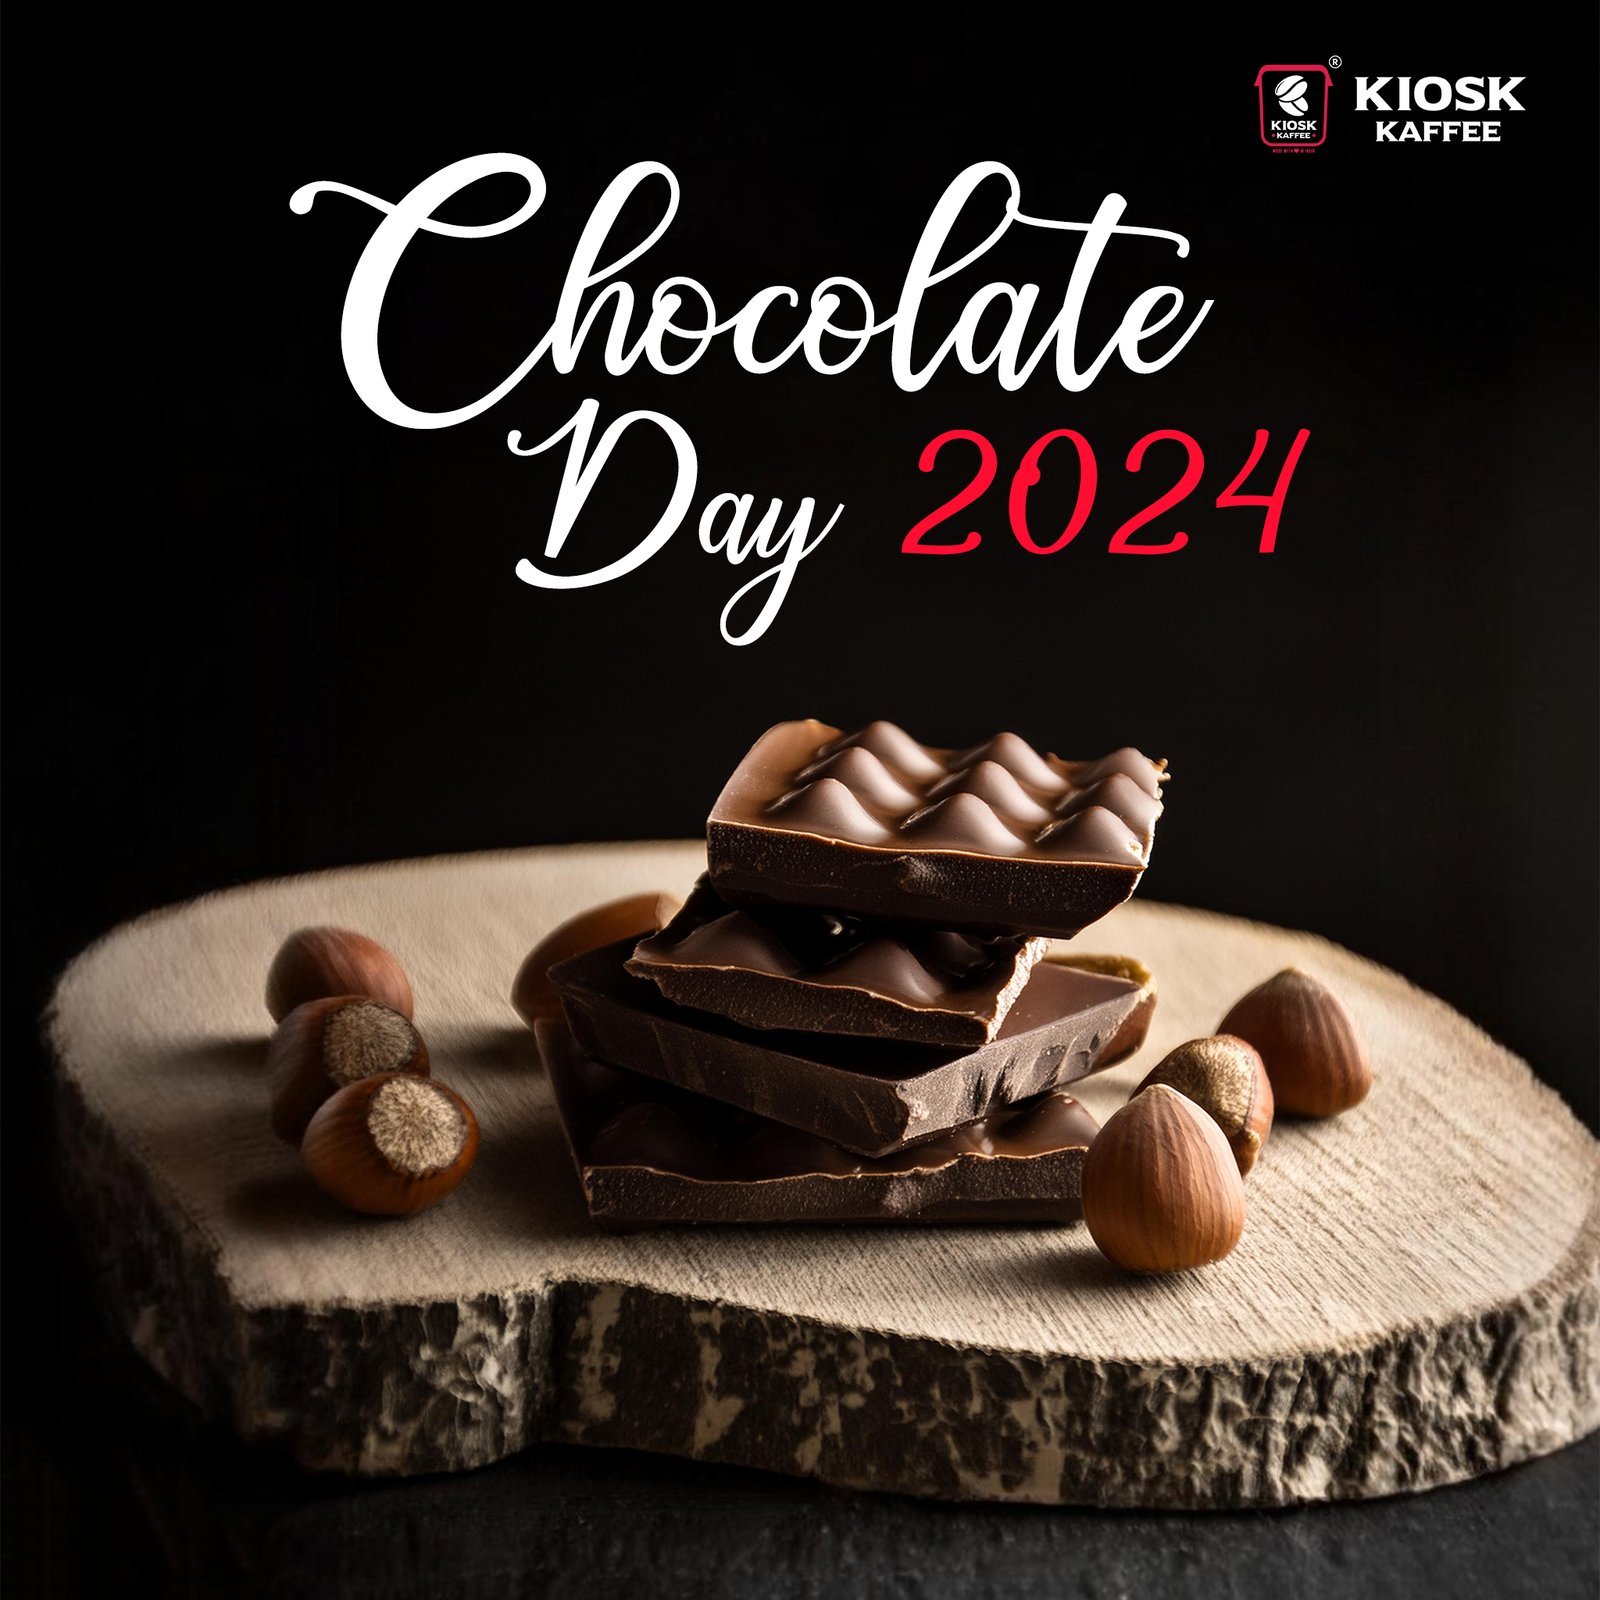 Celebrate World Chocolate Day With Kiosk Kaffee